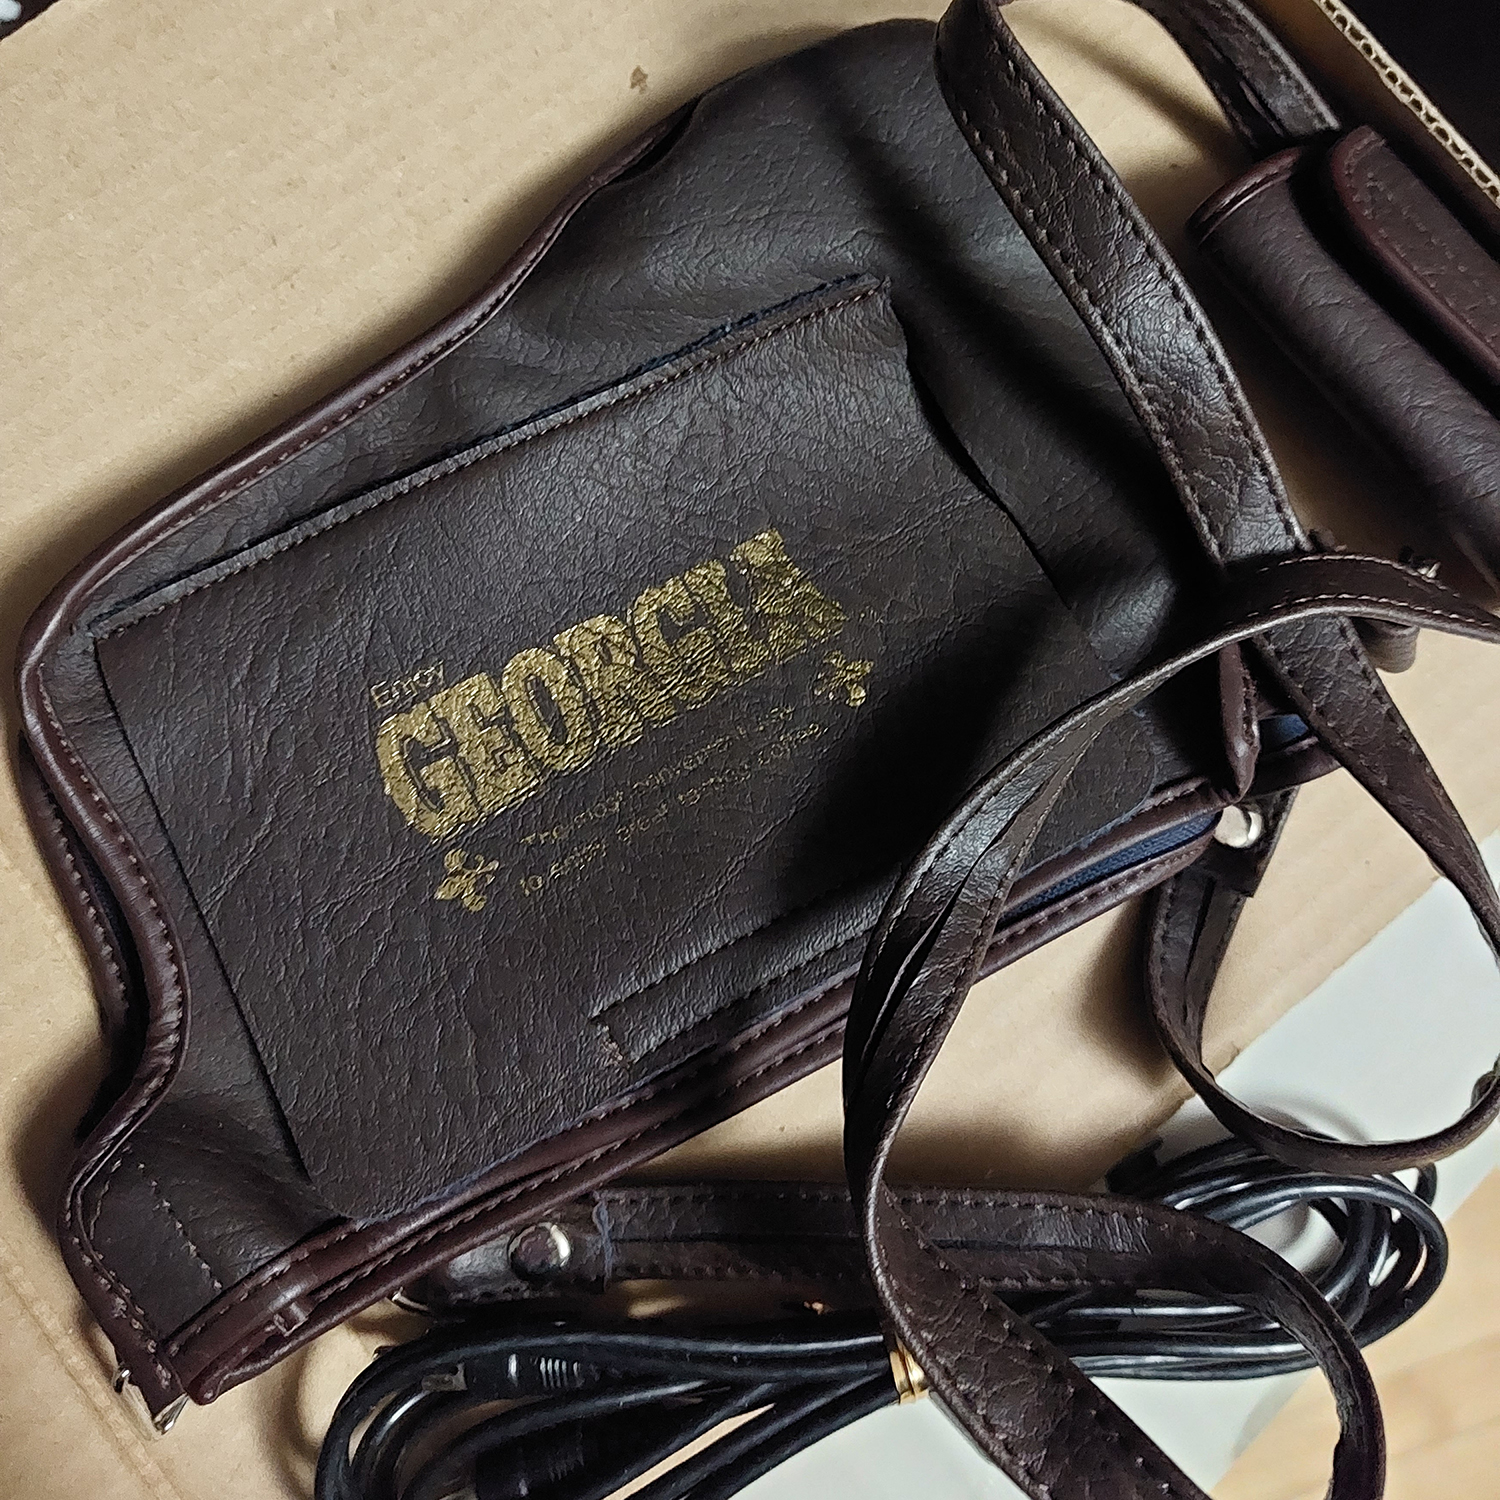 Vintage Video Controller Canvas Zipper Bag – Shop Making Waves